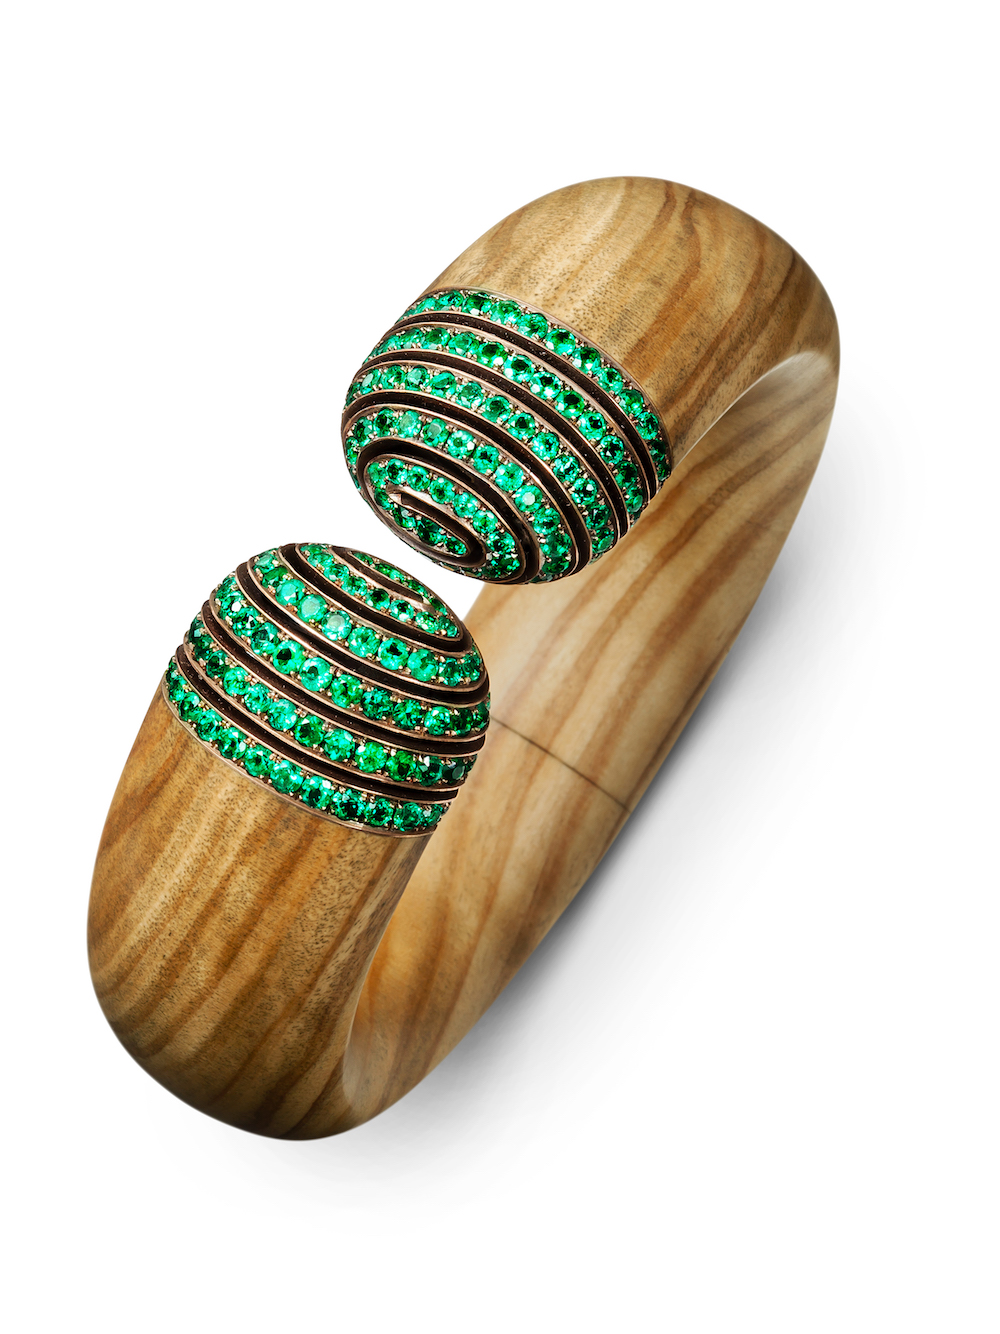 Hemmerle Harmony bangle in olive wood, emeralds, bronze and white gold